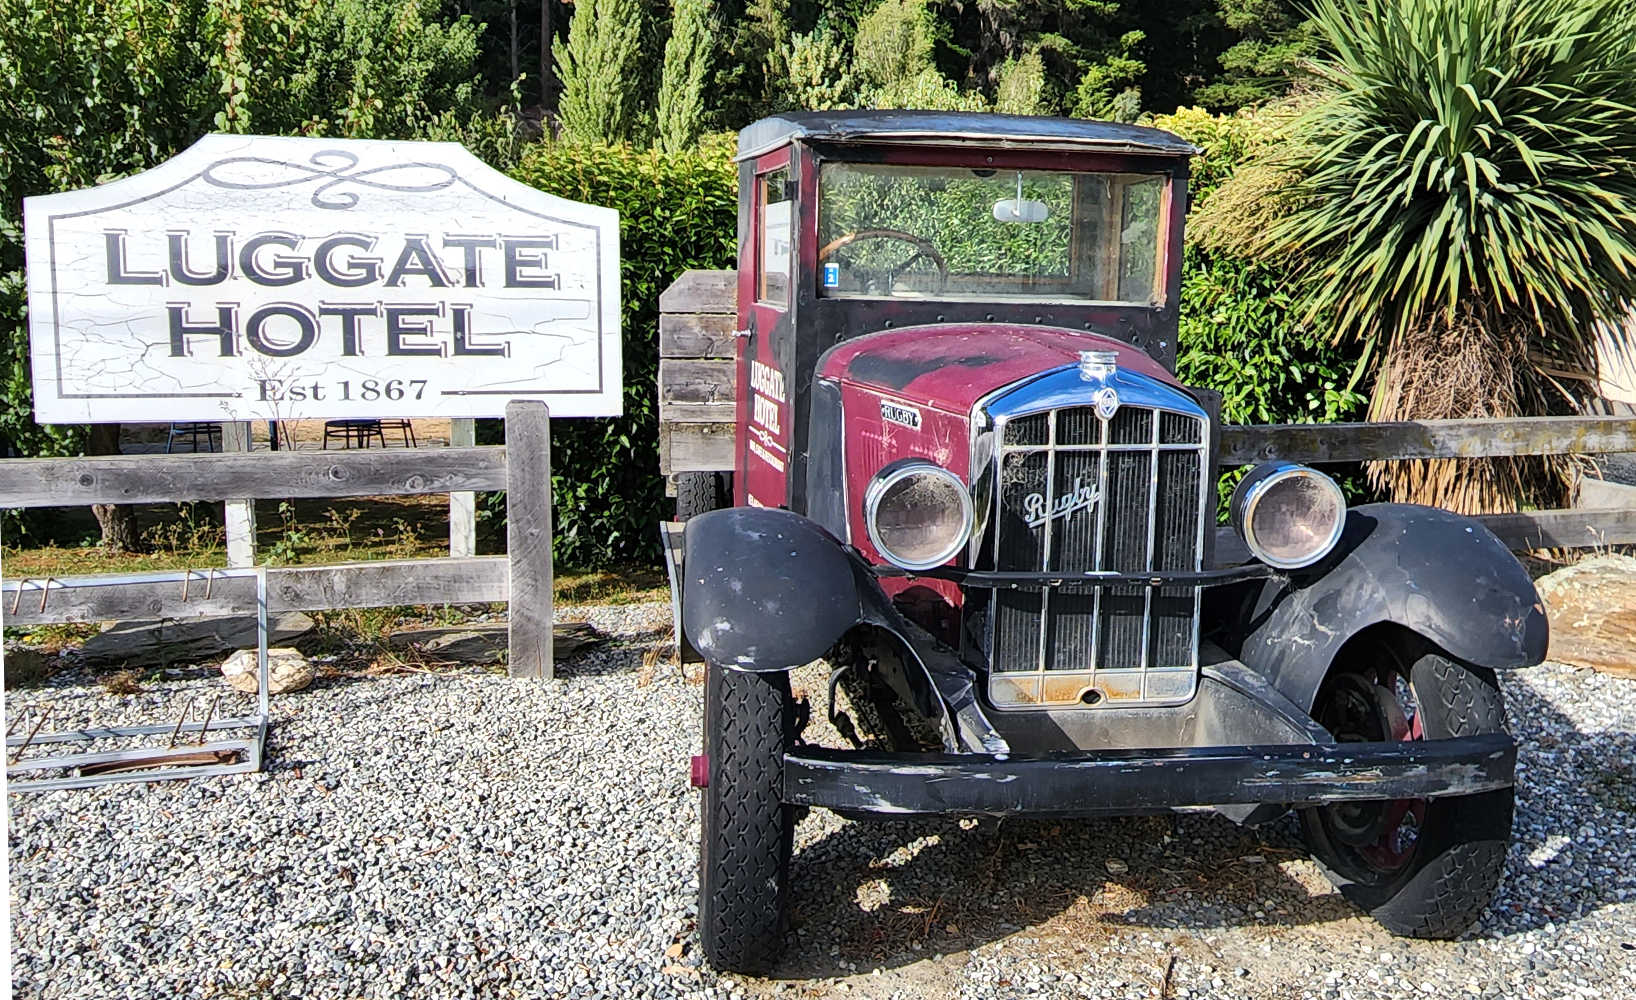 Luggate Hotel vintage vehicle selfie location hot spot, South Island, New Zealand